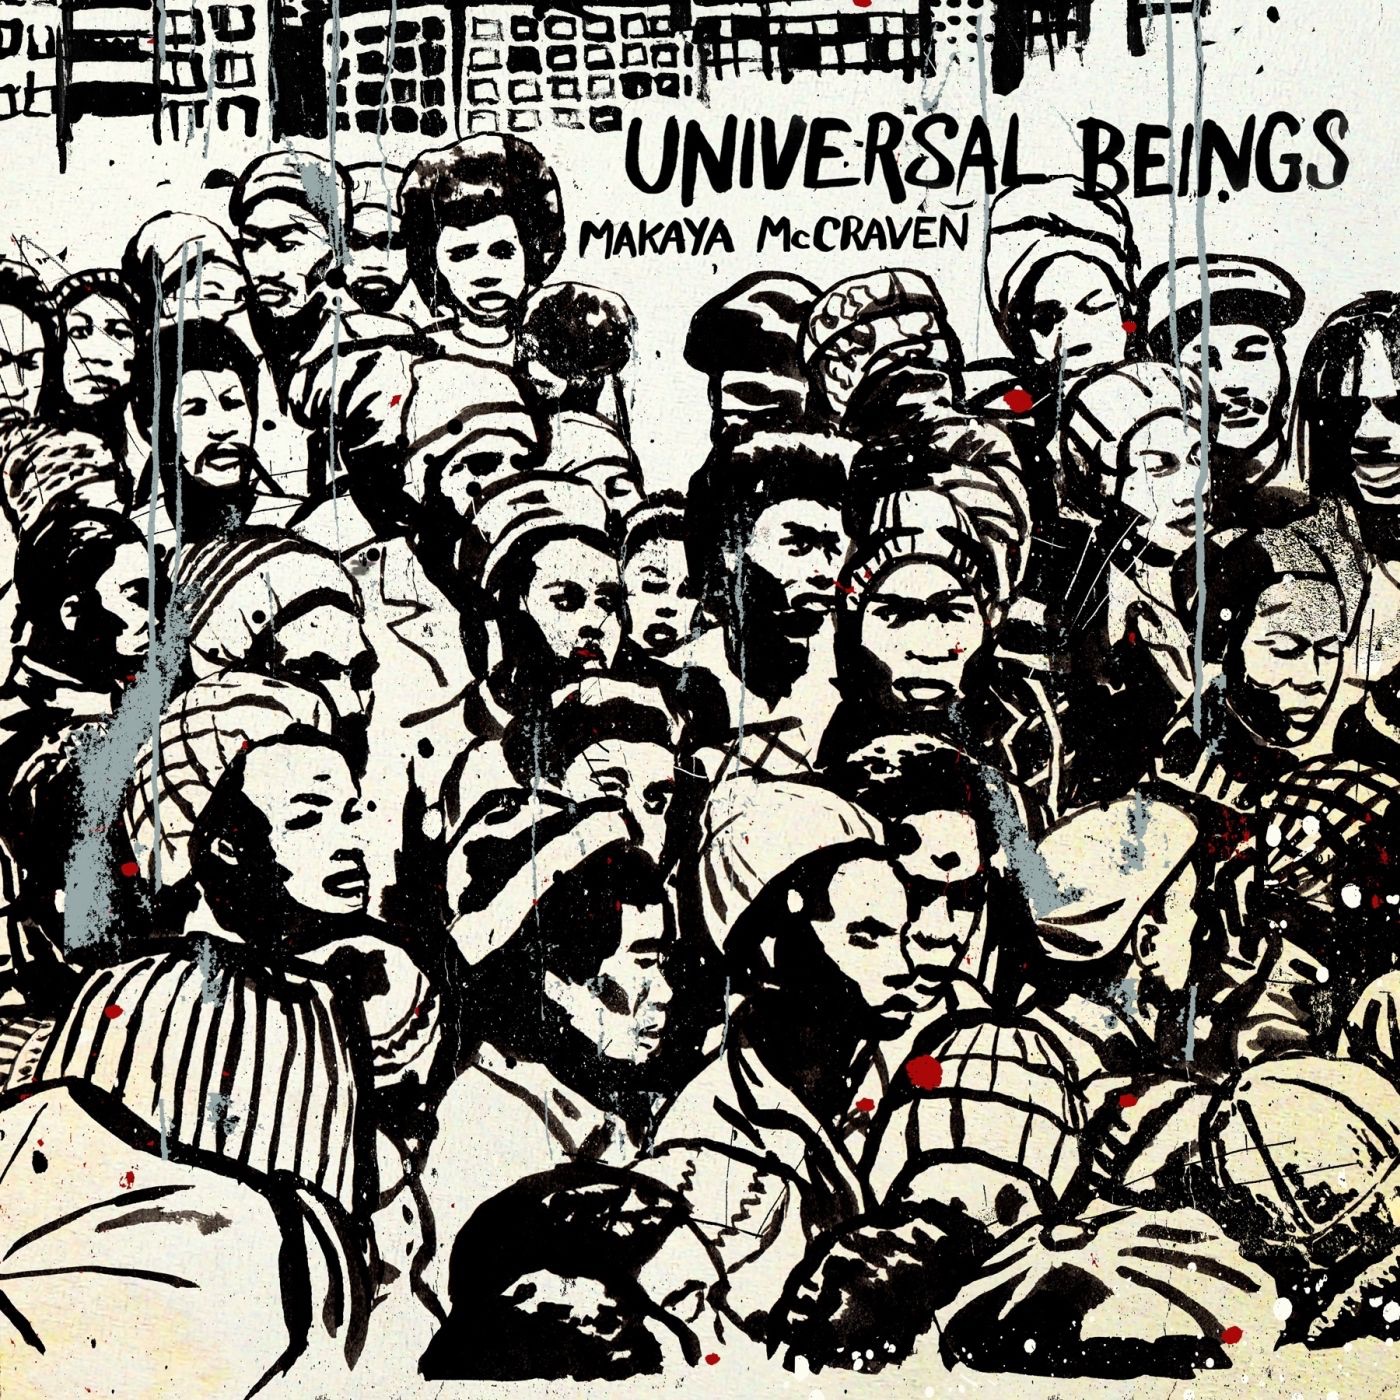 Universal Beings by Makaya McCraven